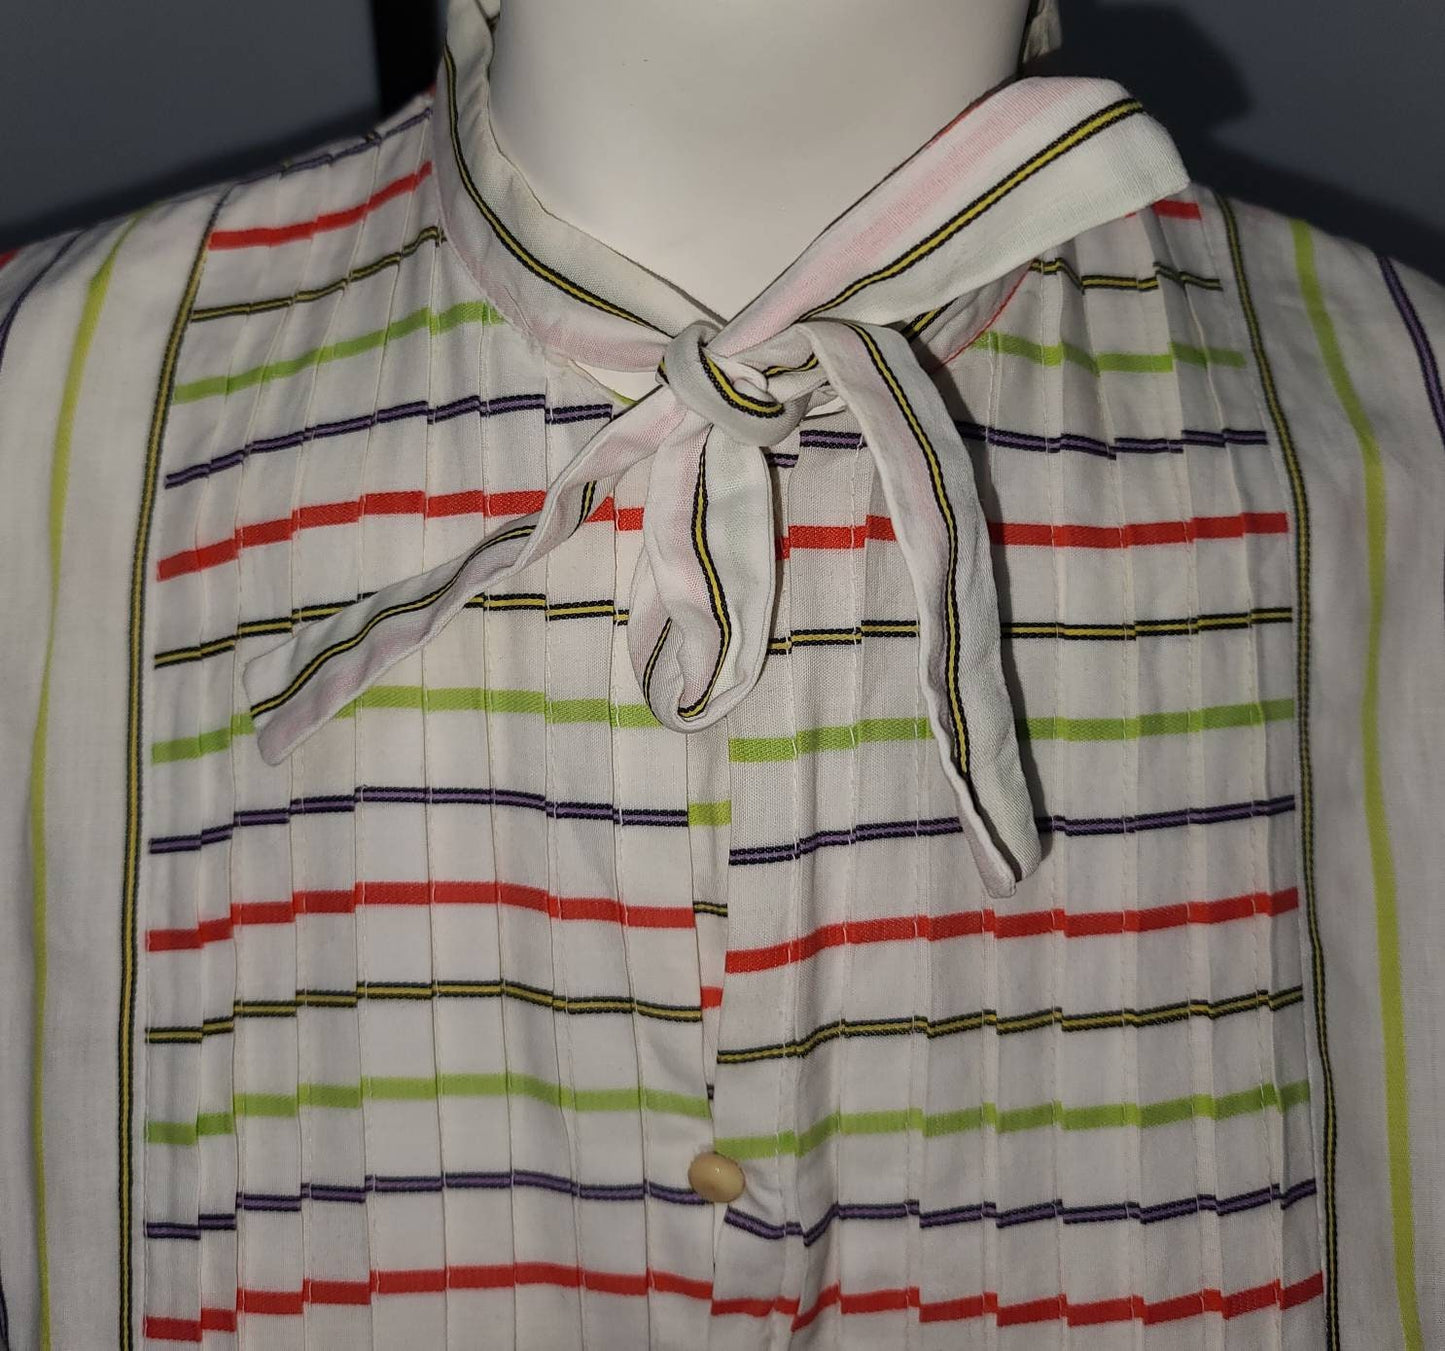 Vintage 1950s Dress Colored Pinstripe Lightweight Cotton Day Dress Tie Neck Pleated Bodice Mid Century Rockabilly S